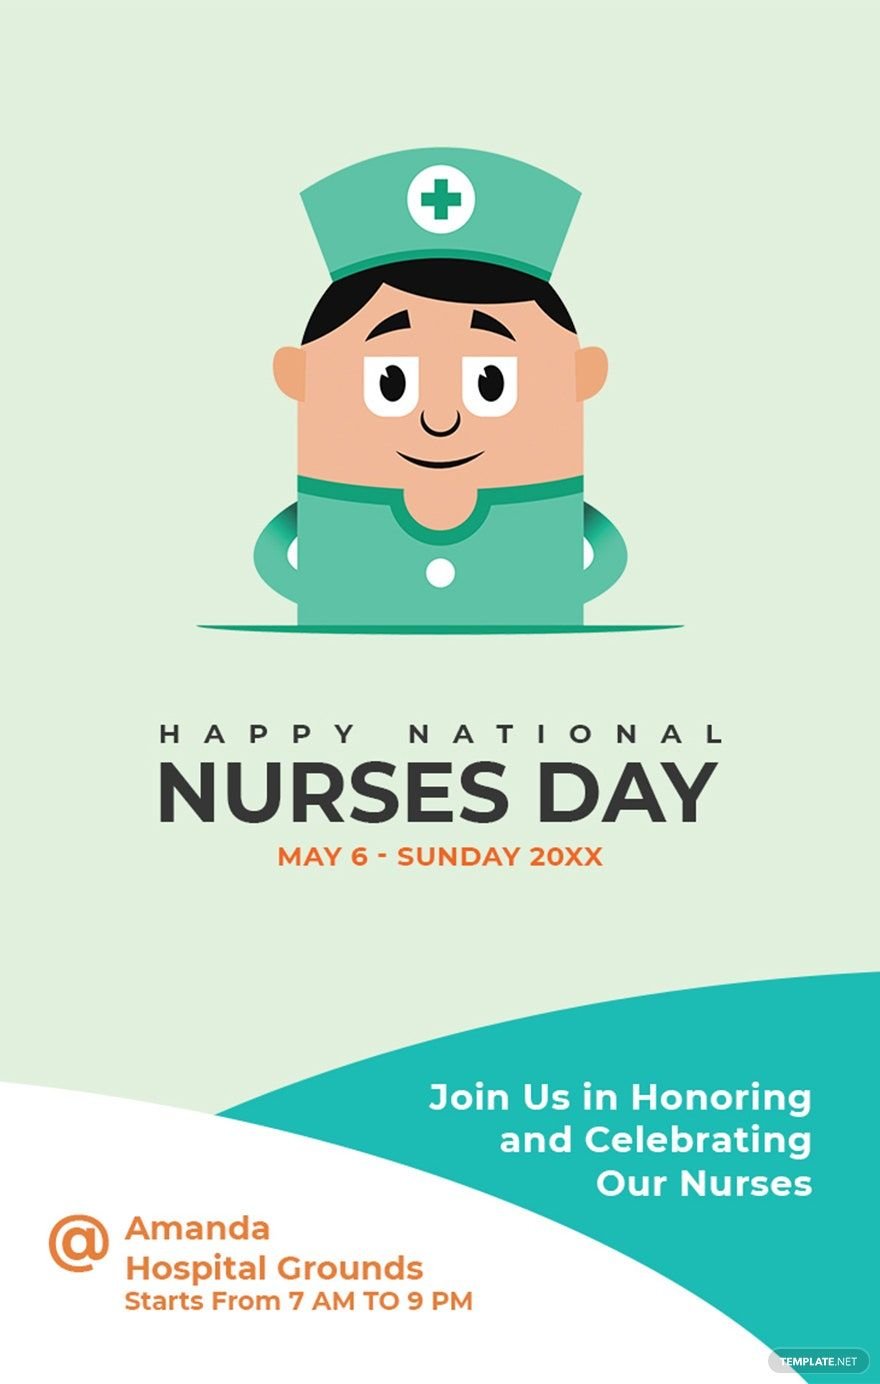 Free Nurses Day Pinterest Pin Template